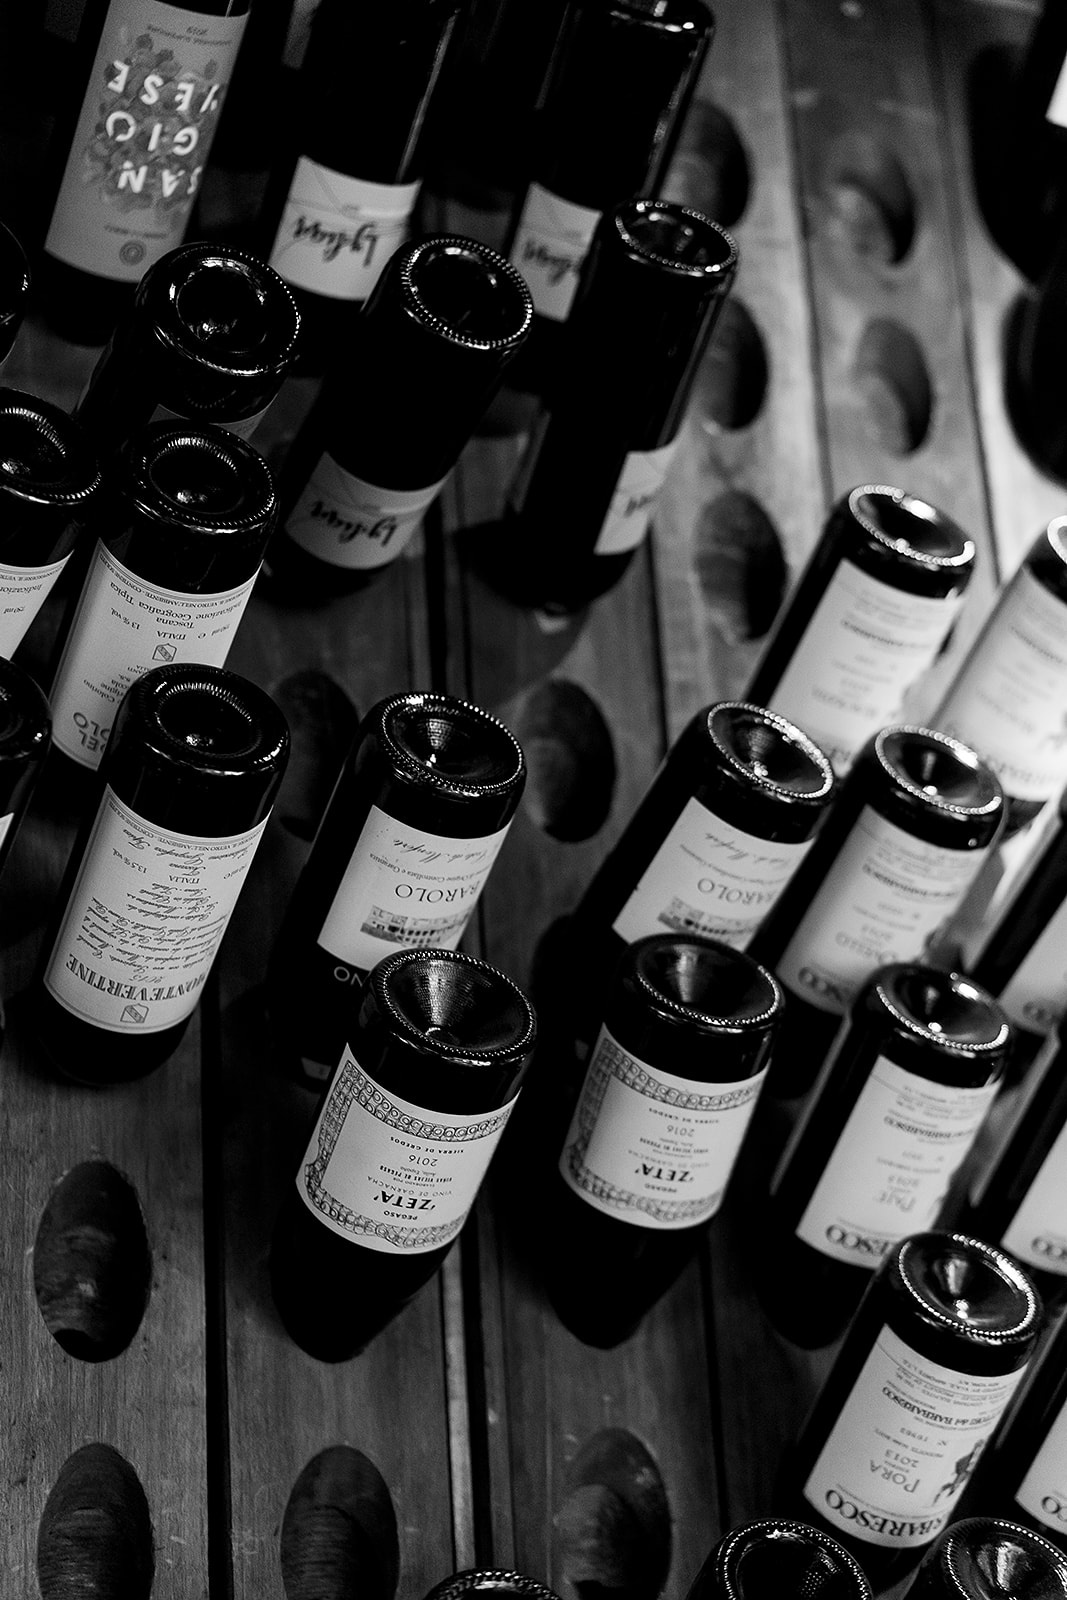 wine bottles on display at Stone Burner in Hotel Ballard